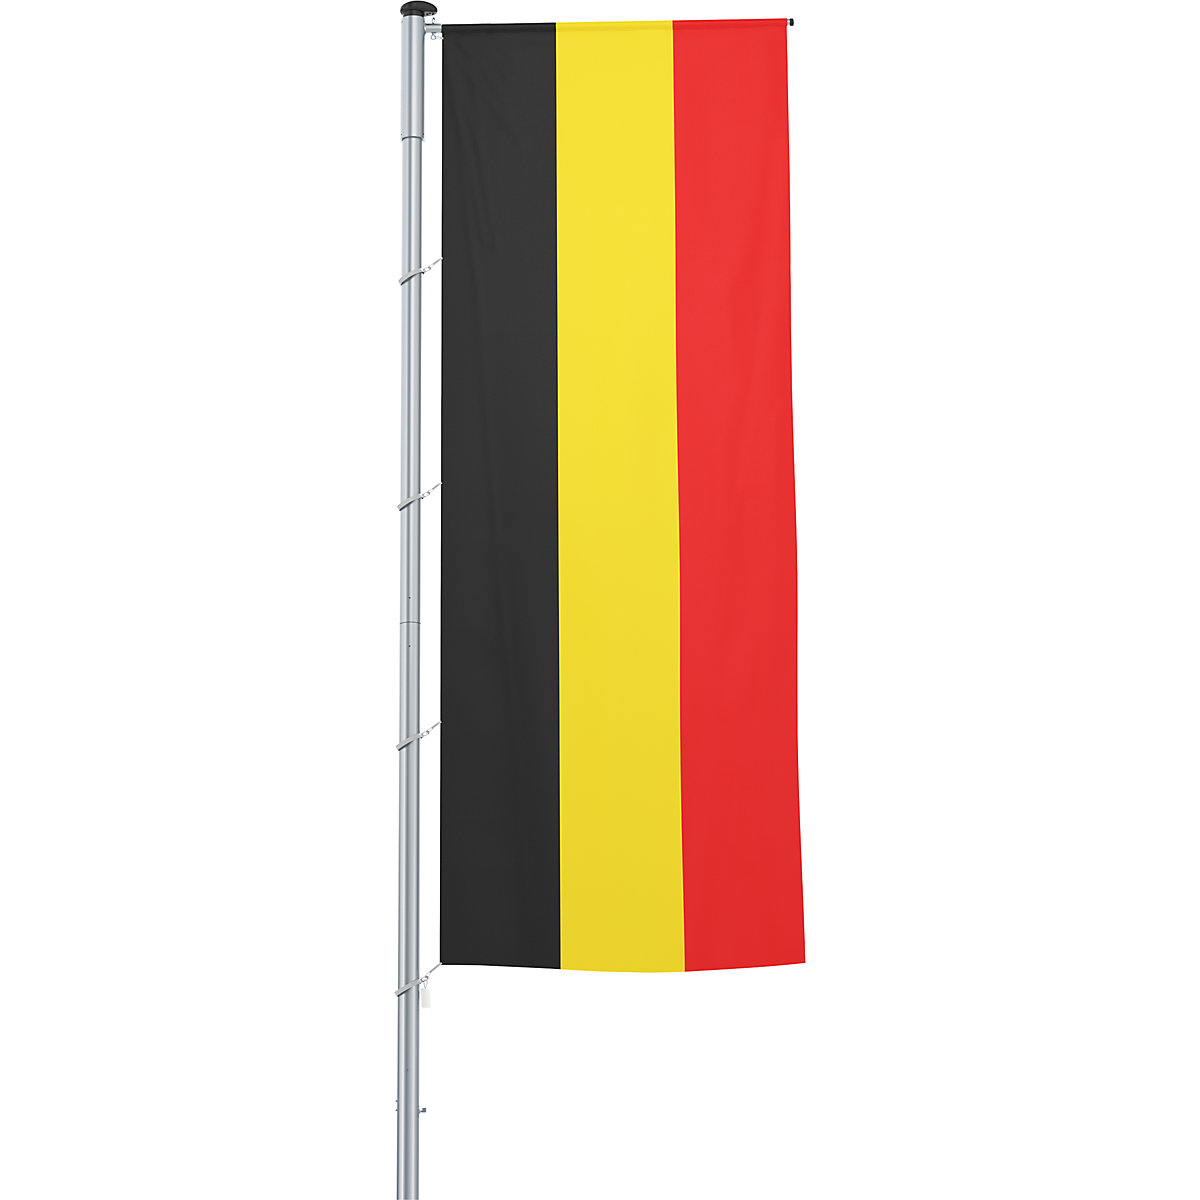 Steag pentru braț/drapel național – Mannus, format 1,2 x 3 m, Belgia-6